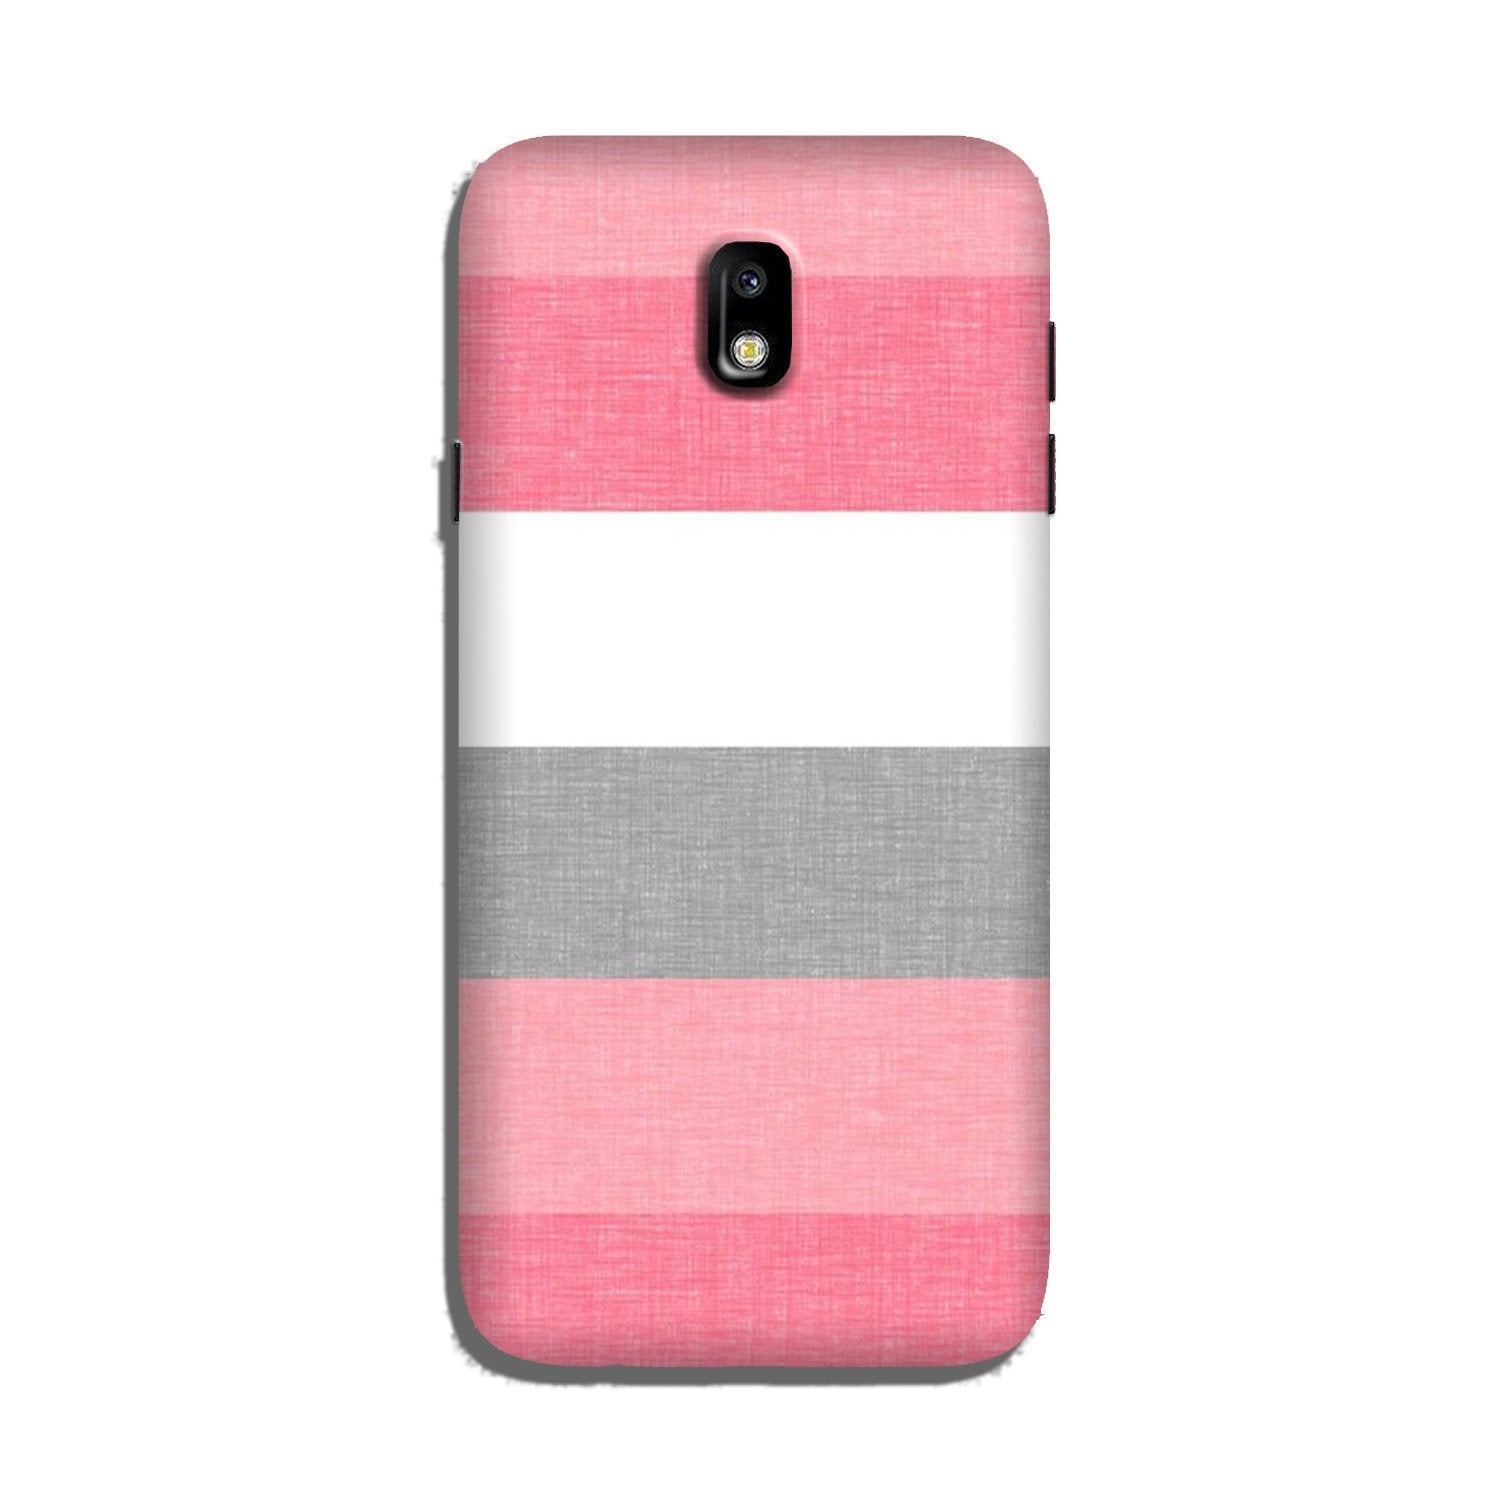 Pink white pattern Case for Galaxy J7 Pro